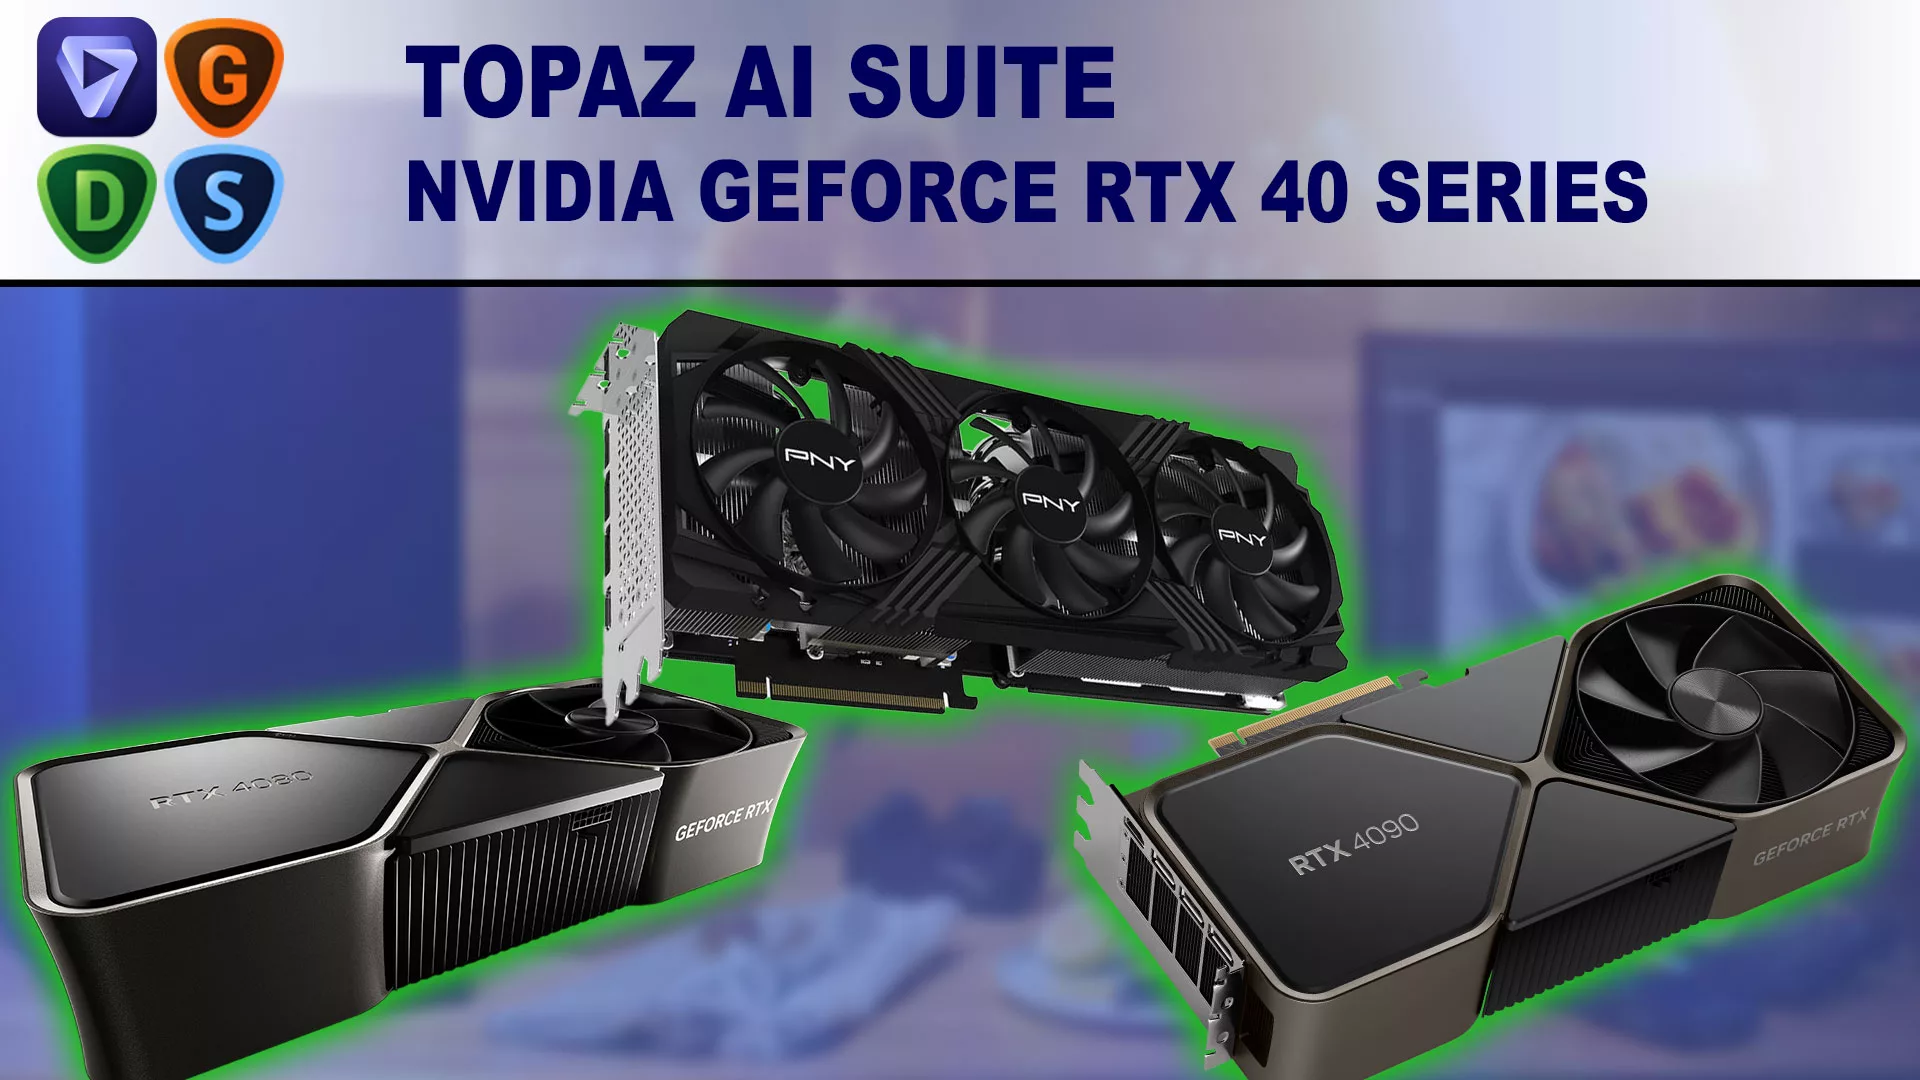 NVIDIA GeForce RTX 40 Series Topaz AI Performance